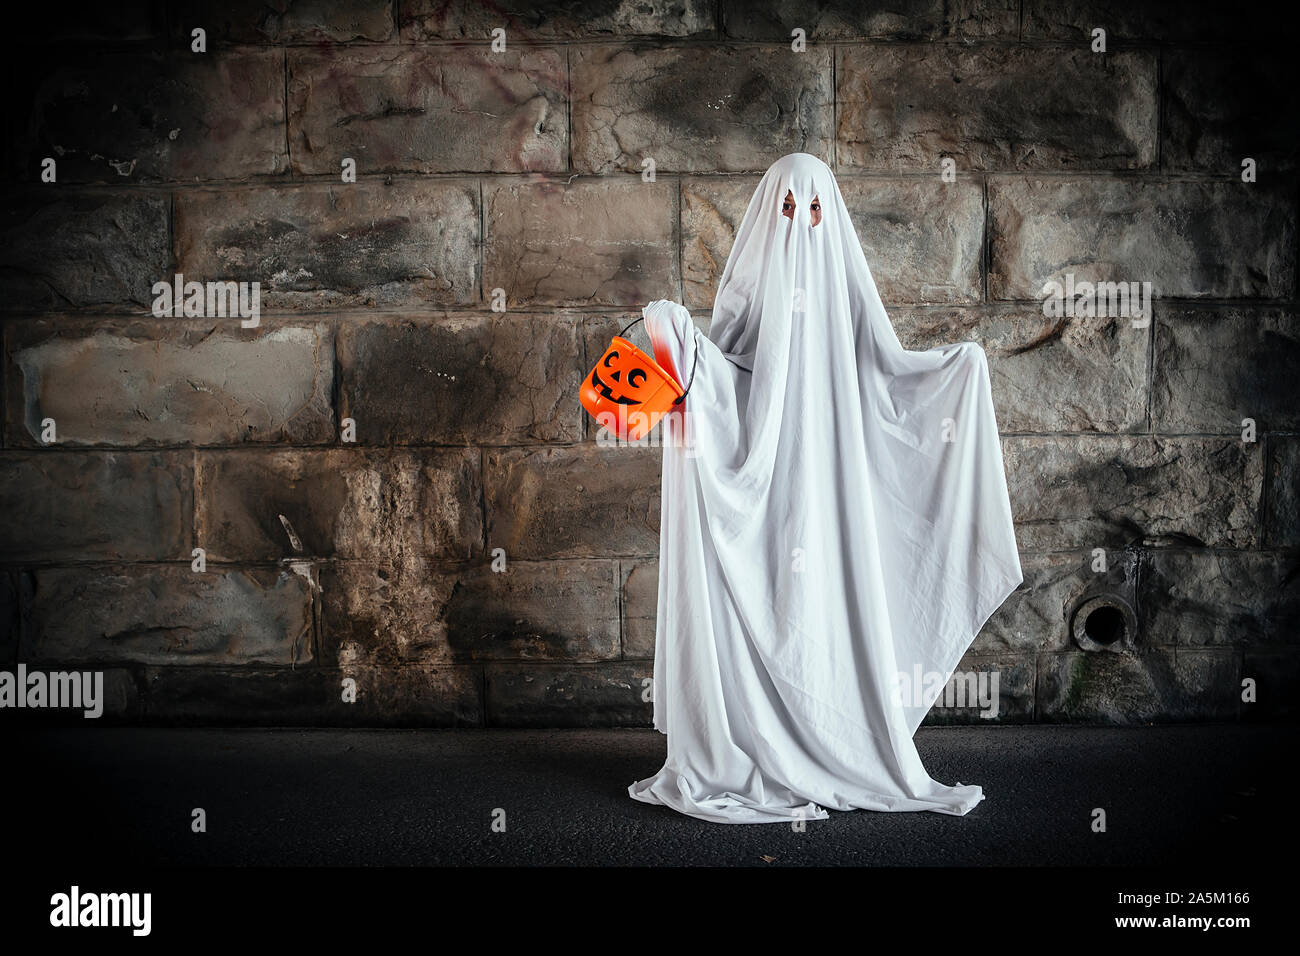 Fantasma de halloween fotografías e imágenes de alta resolución - Alamy